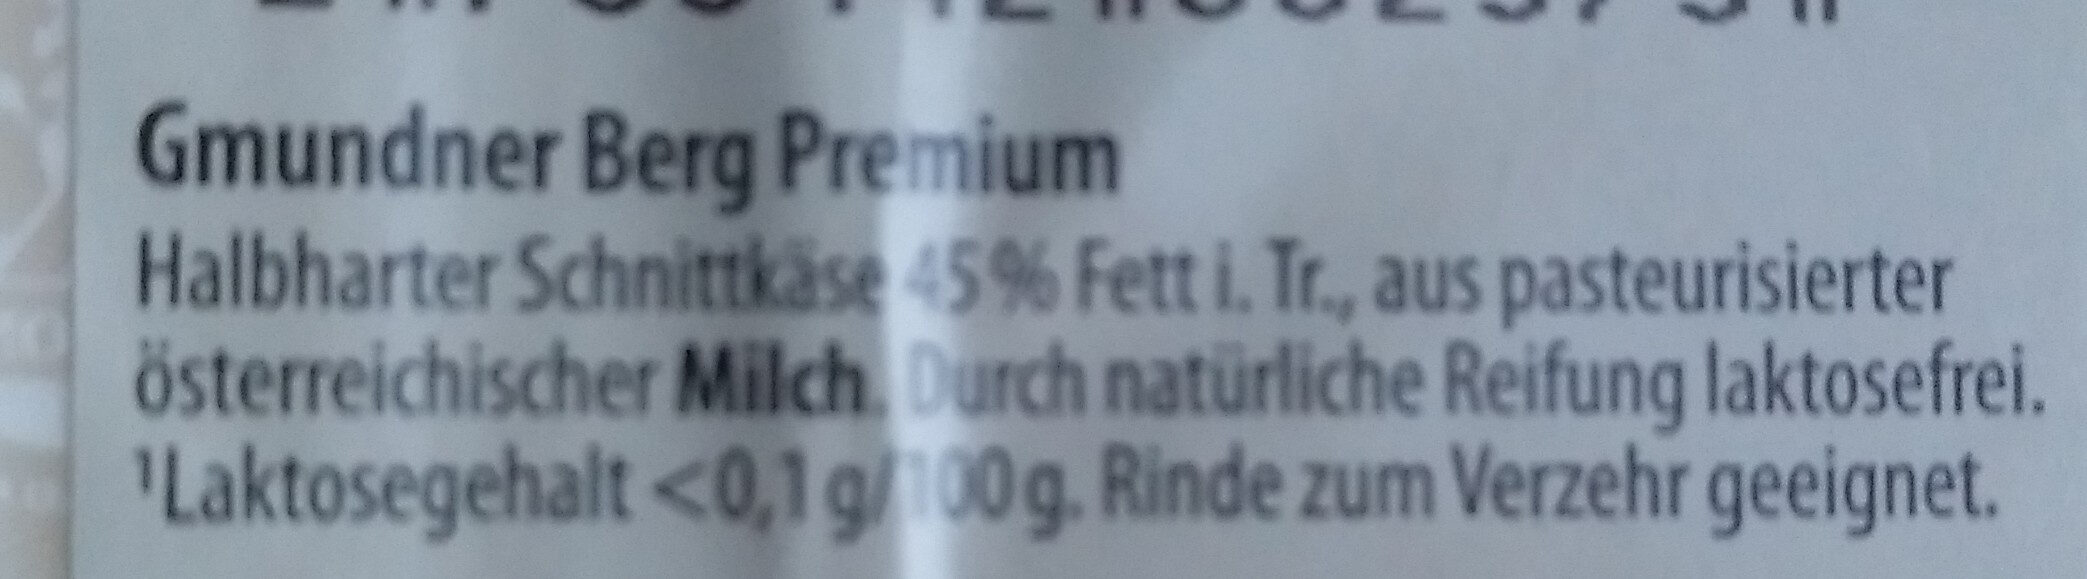 Gmundner Berg Premium - Ingredients - de